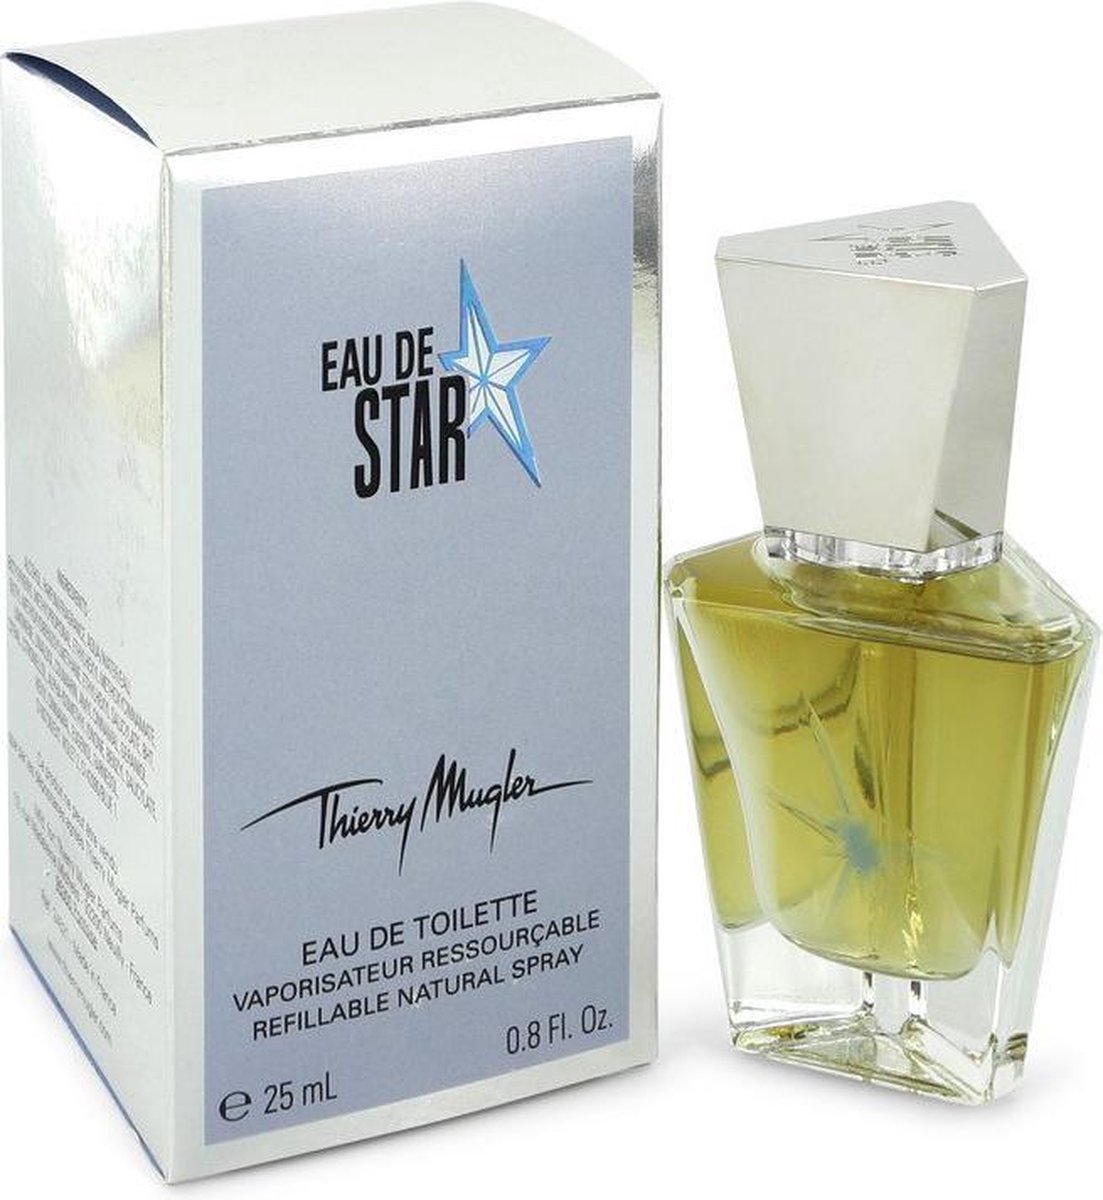 Eau De Star by Thierry Mugler 25 ml - Eau De Toilette Spray Refillable